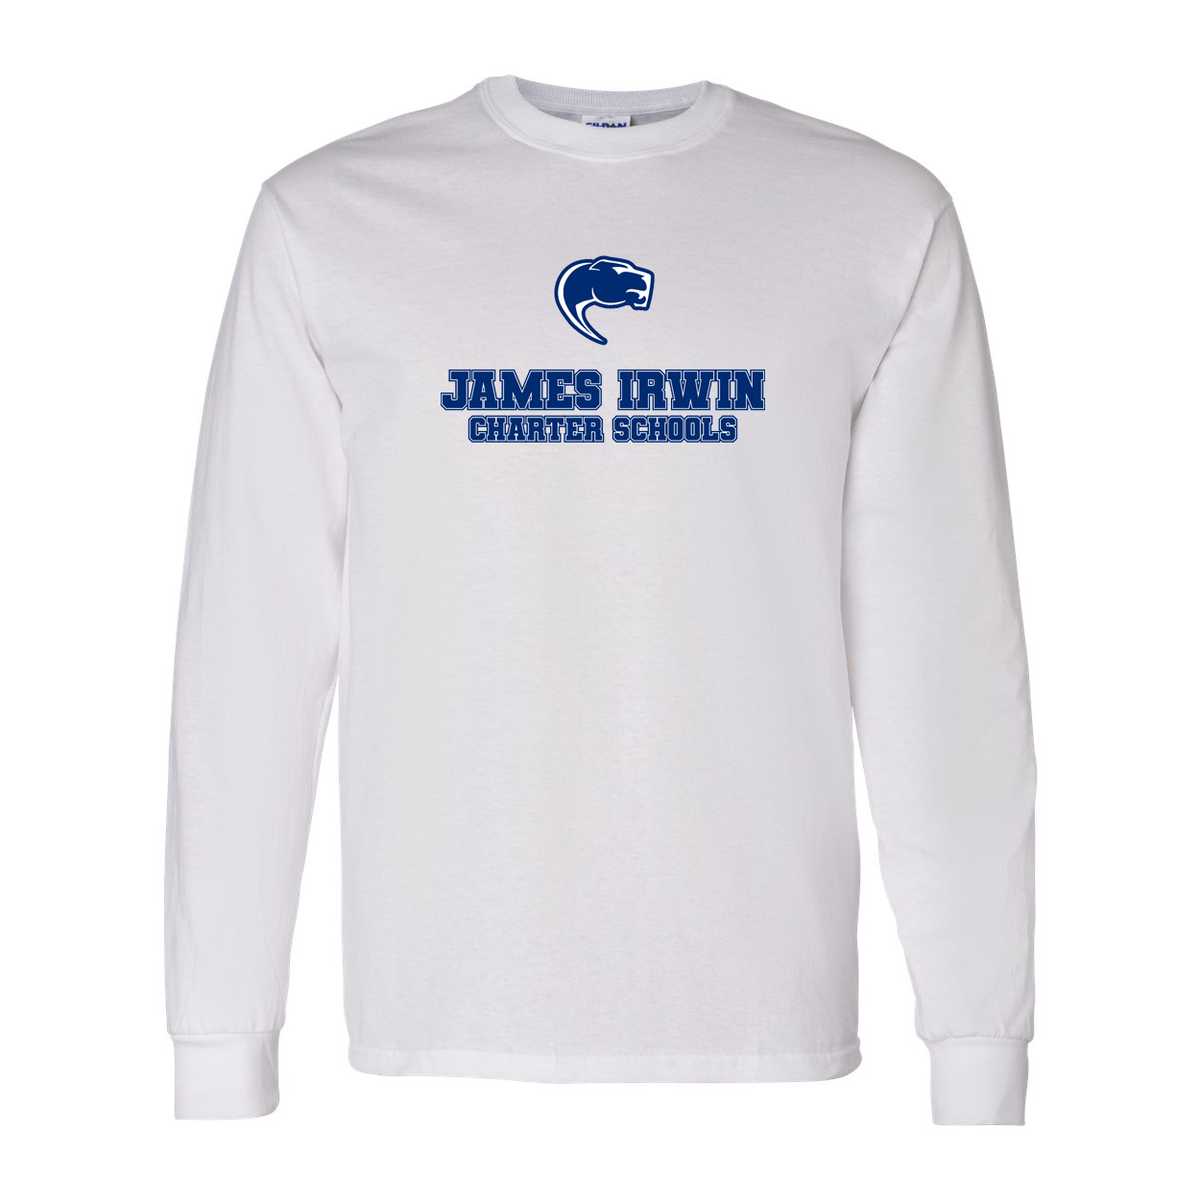 James Irwin Charter Schools Ultra Cotton Long Sleeve Shirt